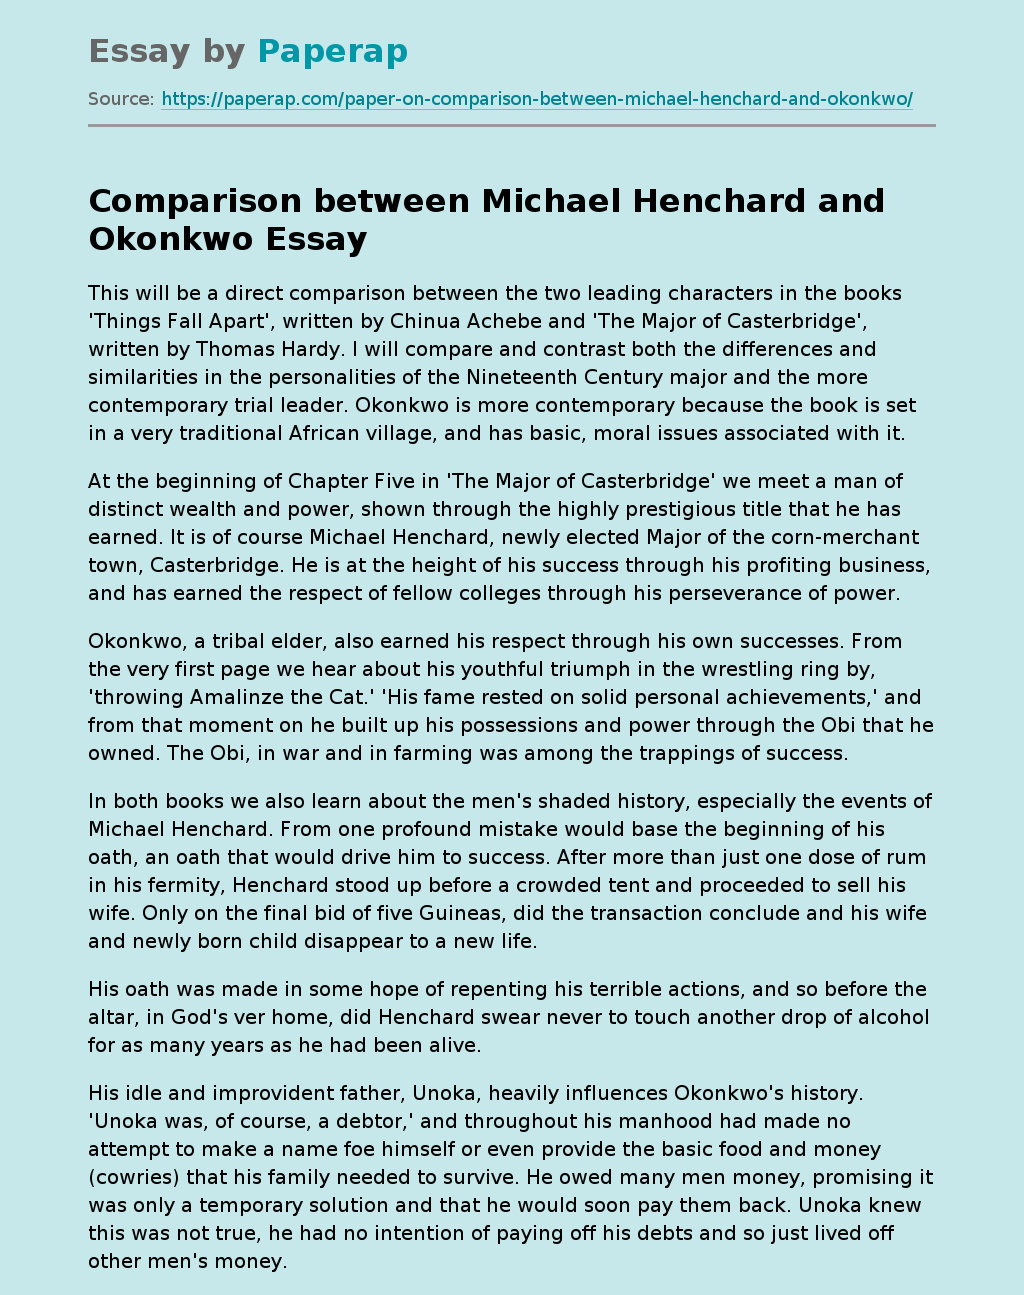 Comparison between Michael Henchard and Okonkwo